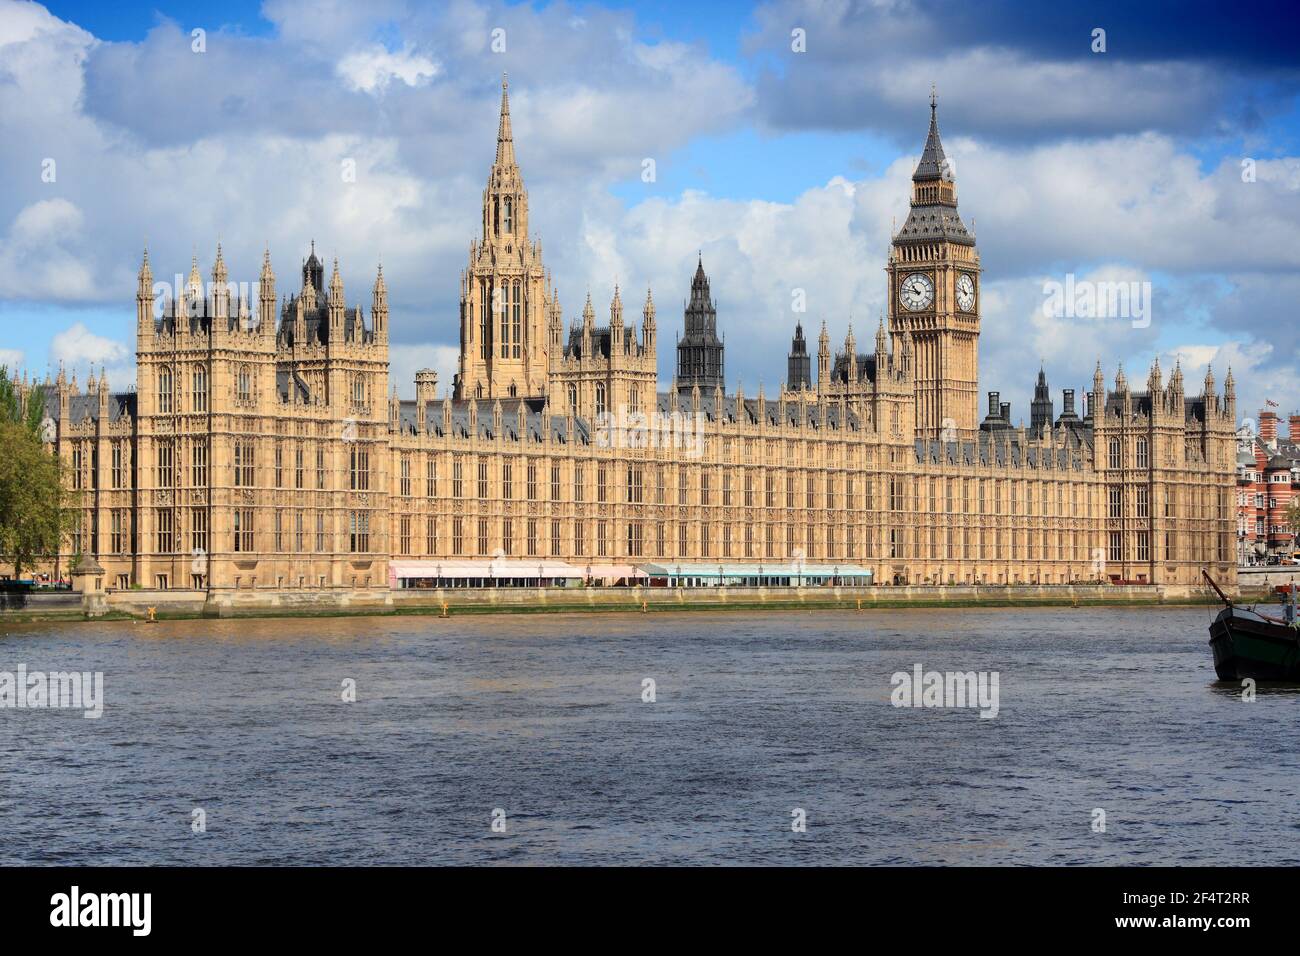 Big Ben clock. Palace of Parliament in London UK. Landmark of London. Stock Photo